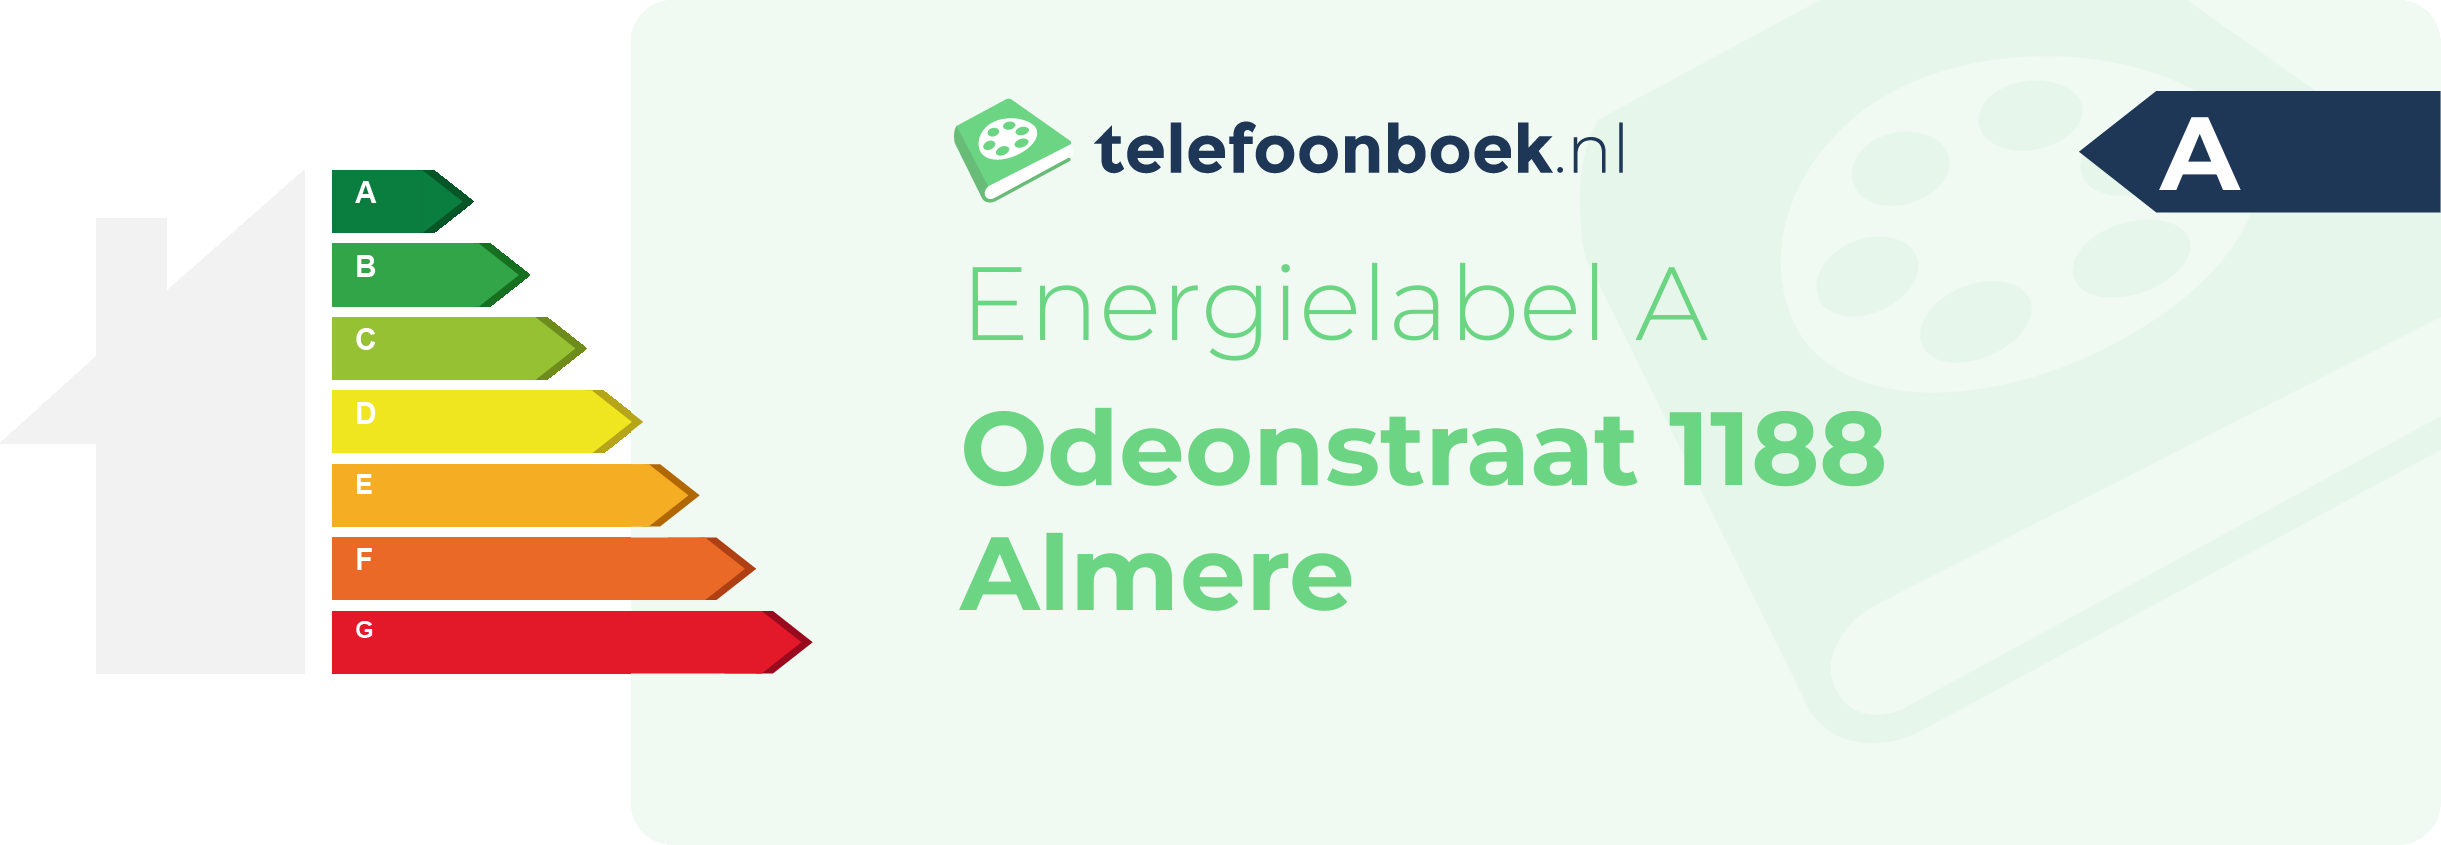 Energielabel Odeonstraat 1188 Almere